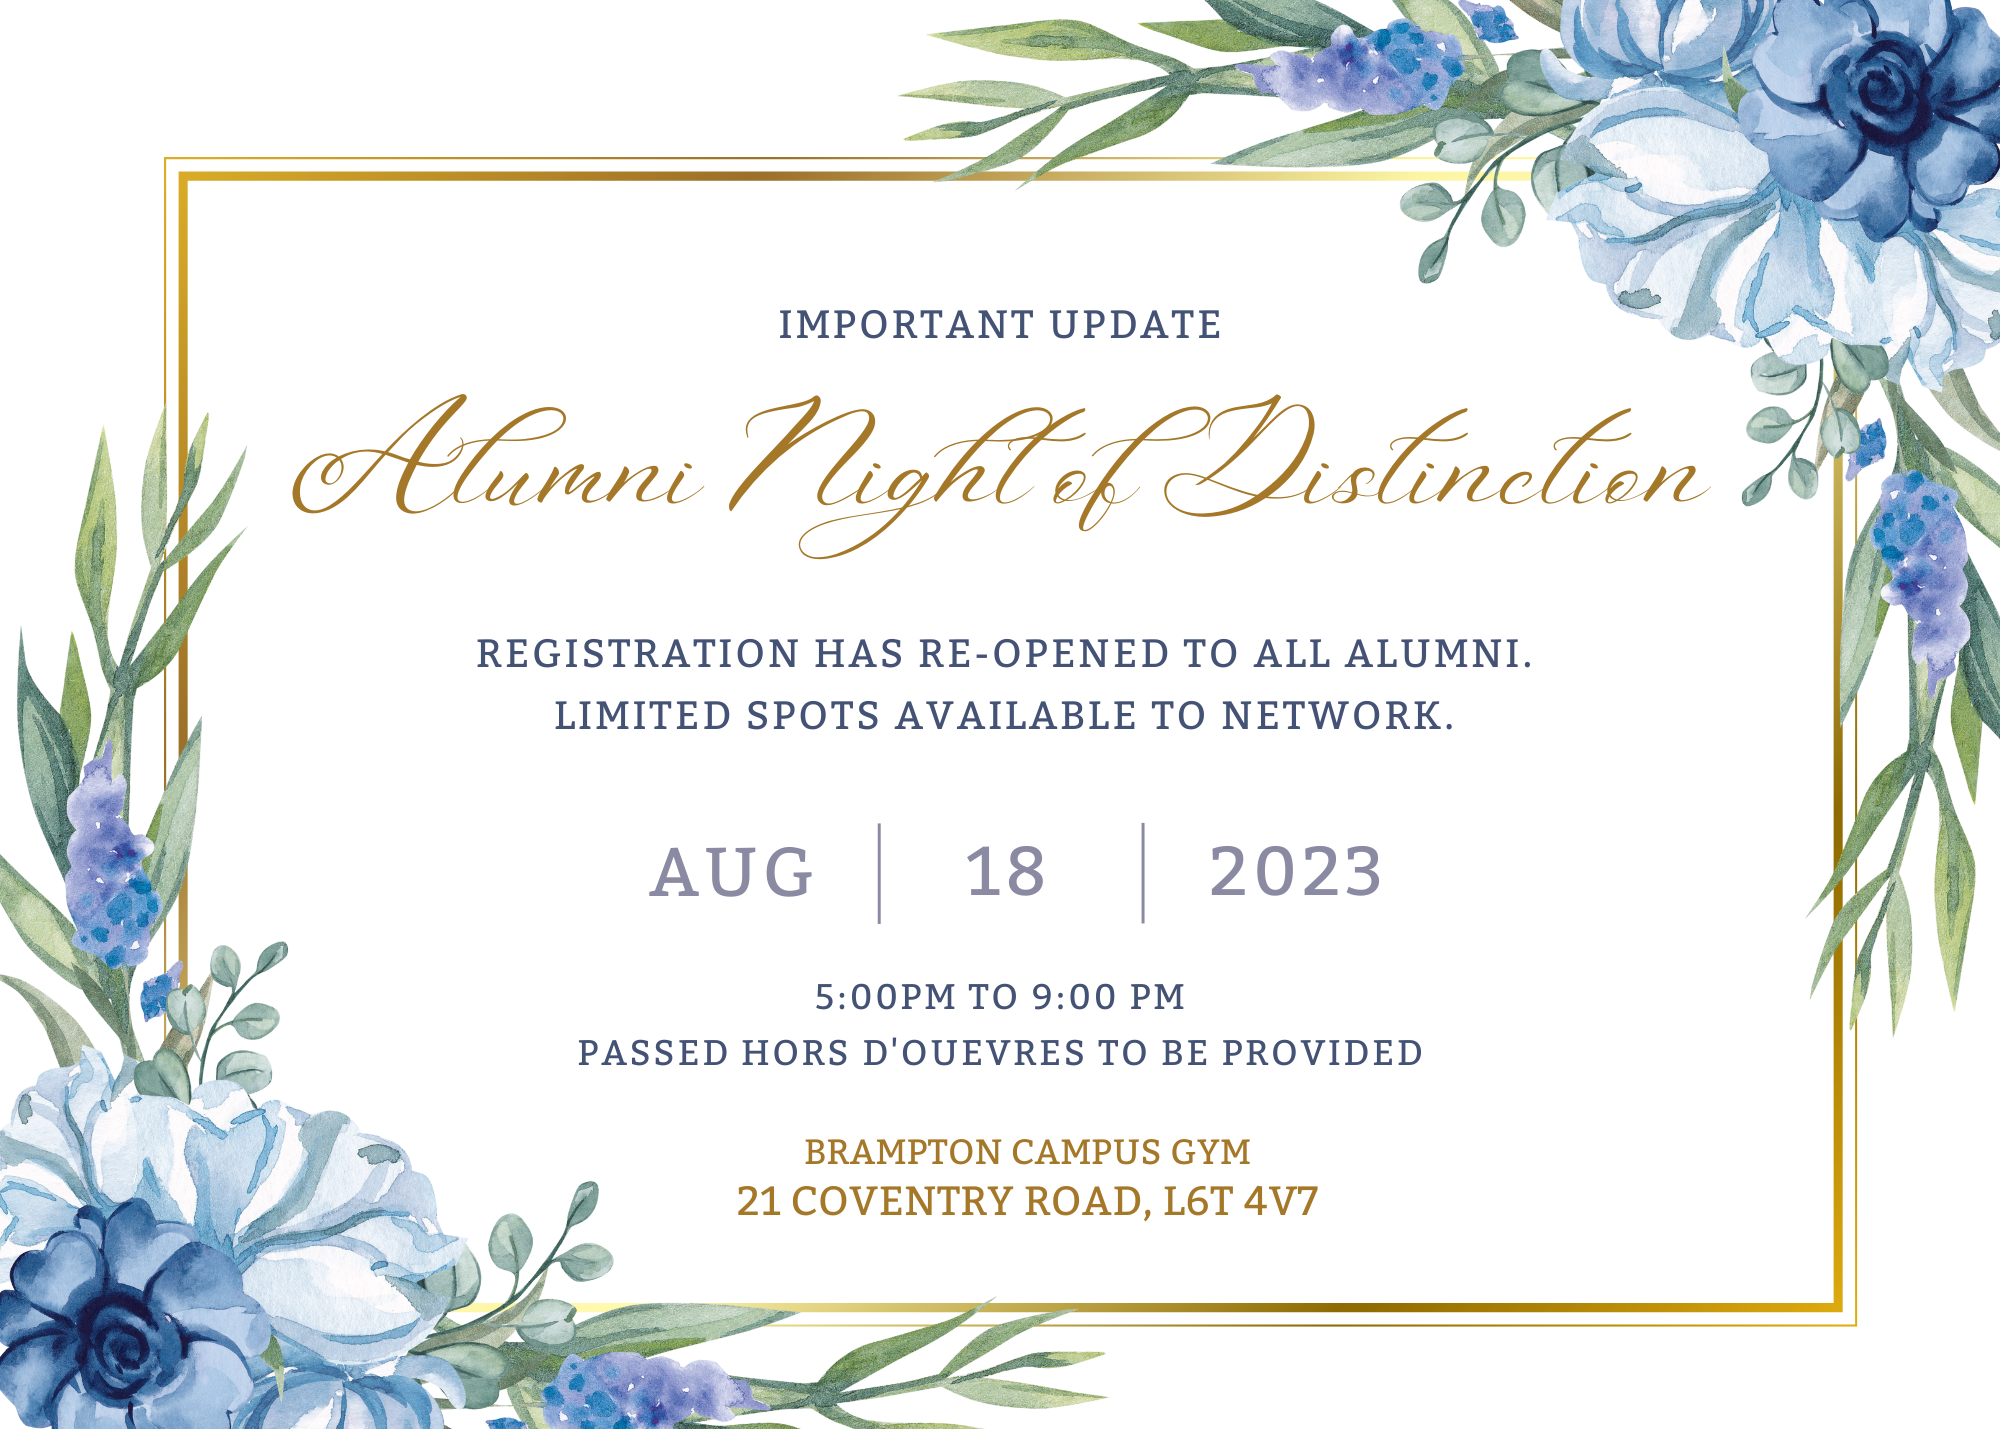 Alumni Night of Distinction -Update